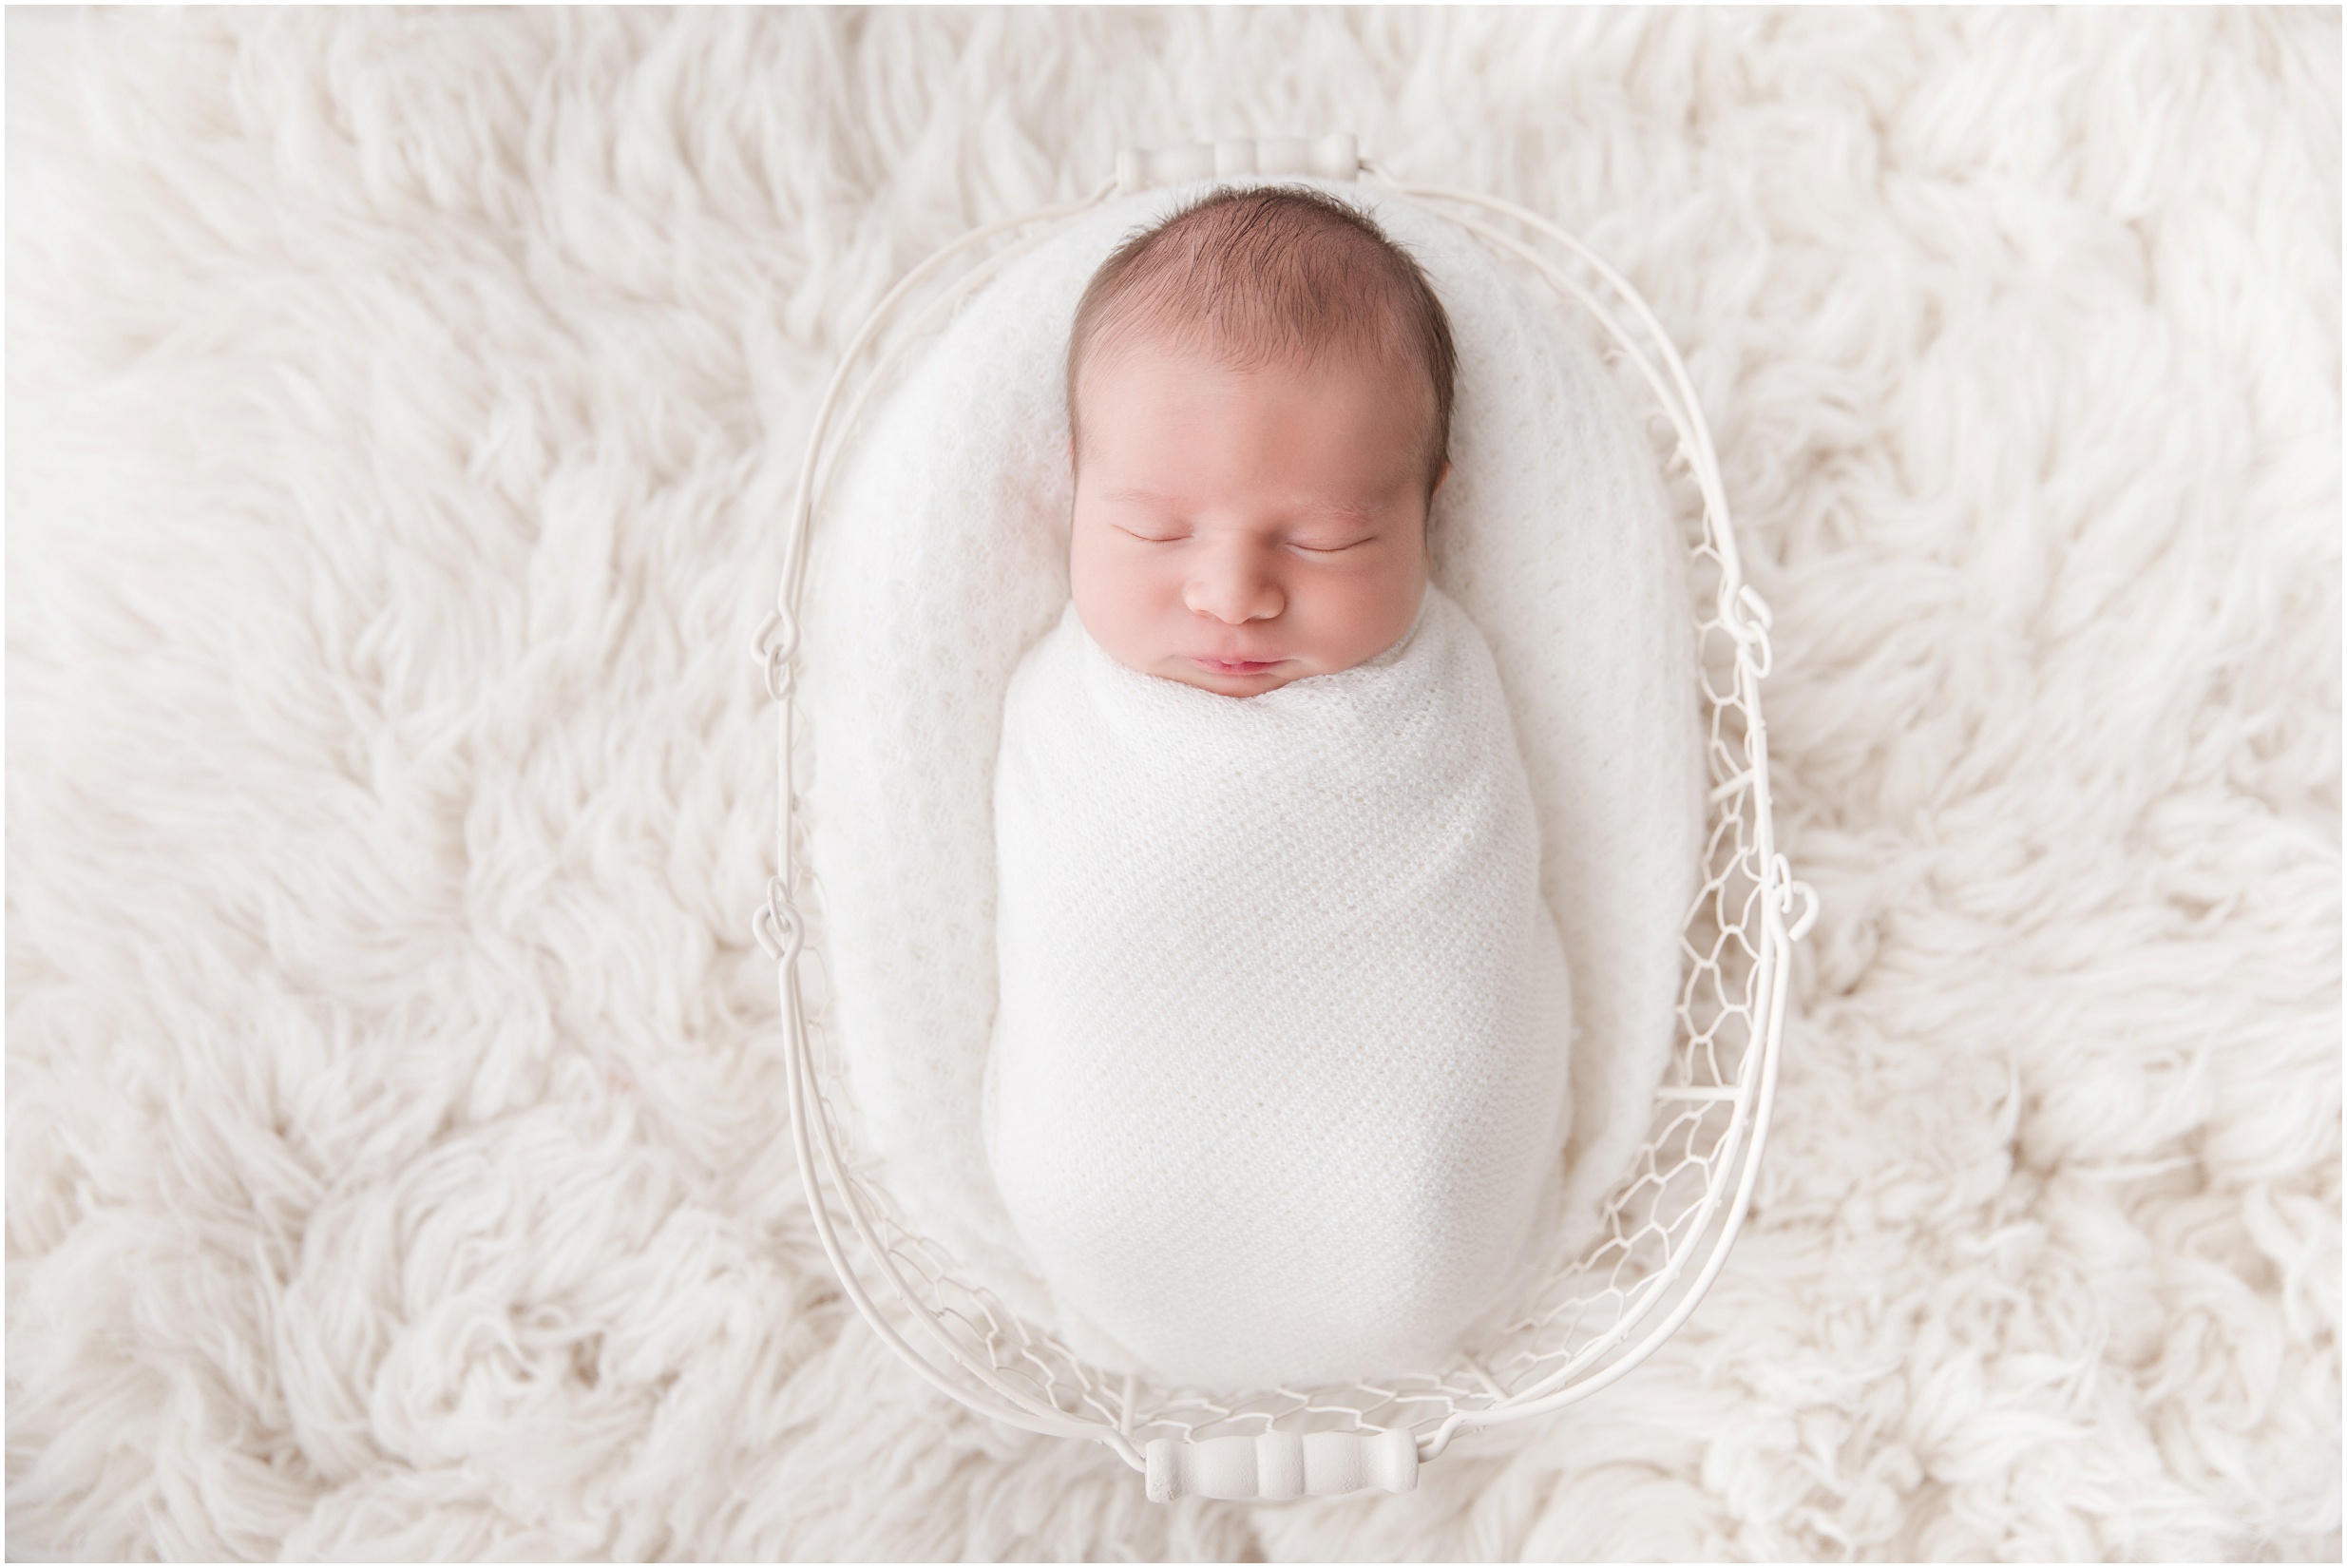 edmonton newborn photographer, nc photography, st albert newborn photographer, edmonton newborn photographers